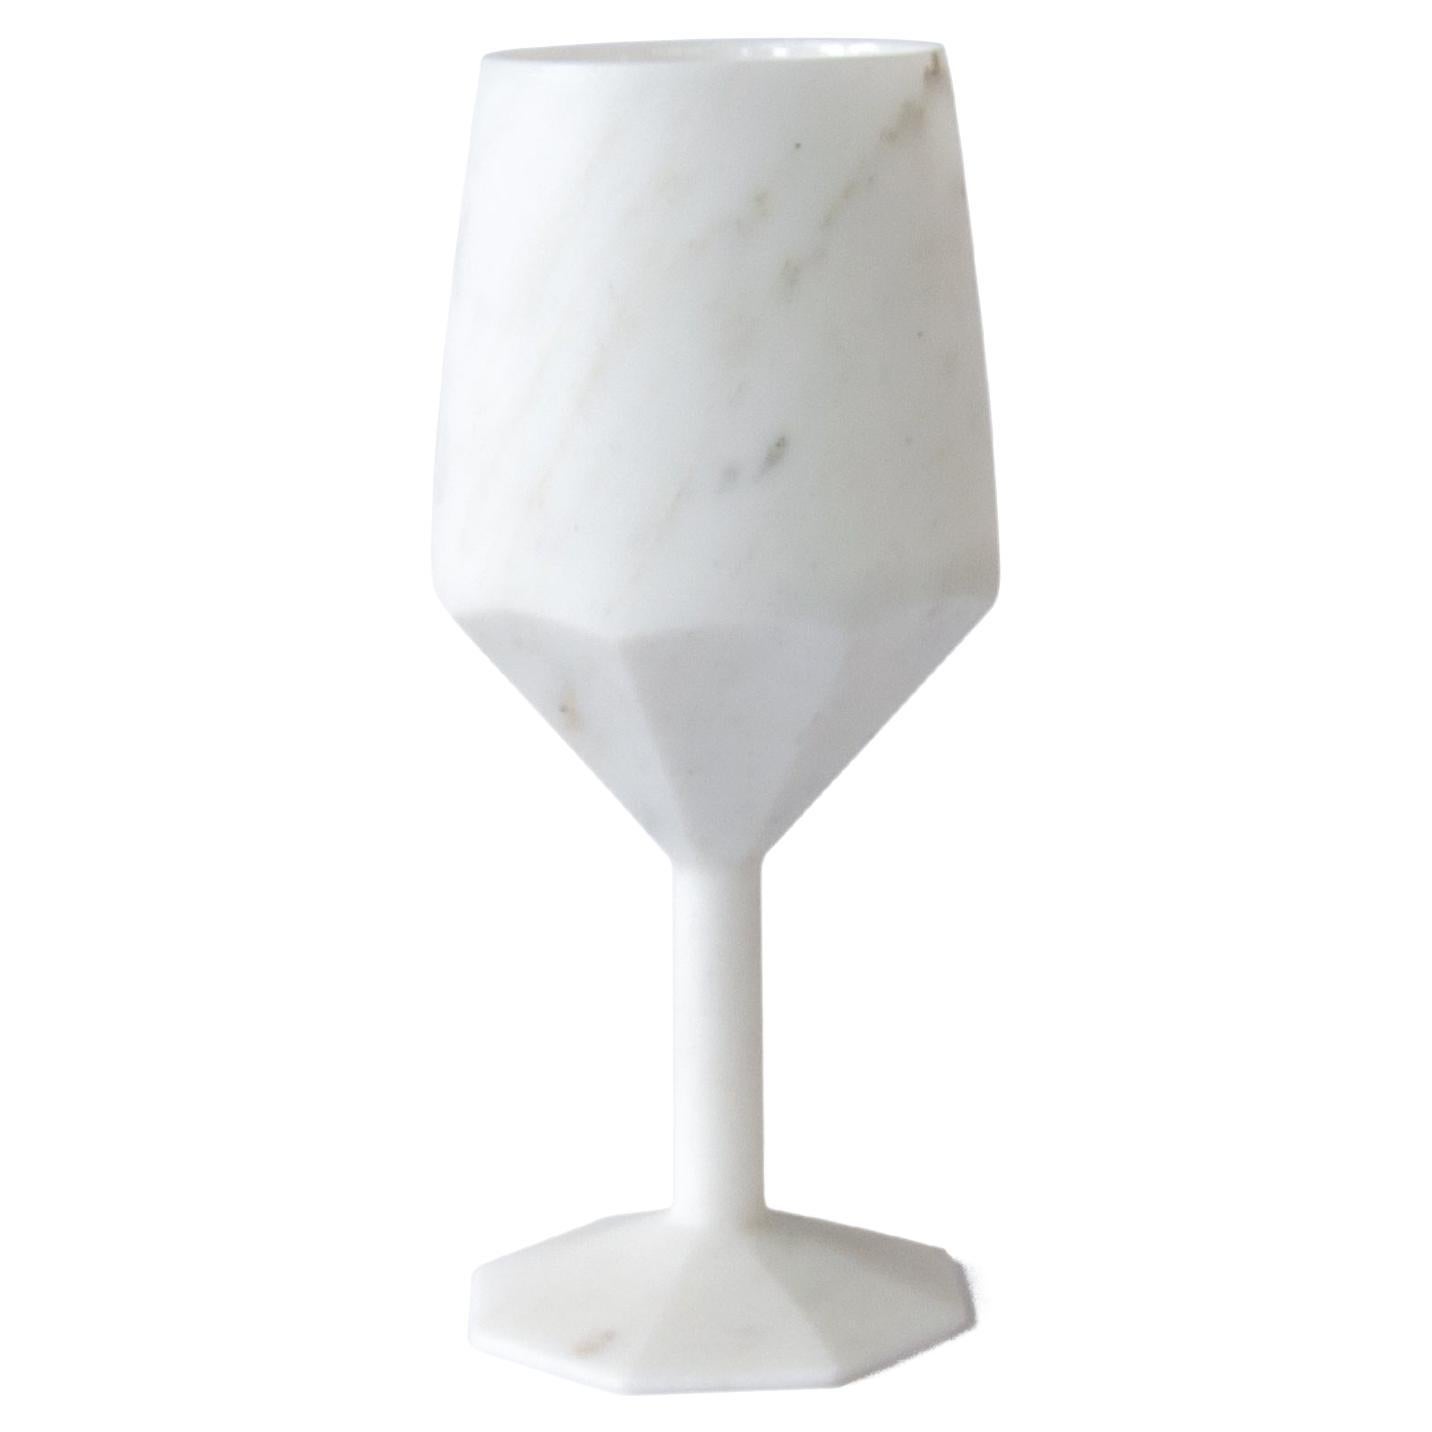 Handgefertigtes Cocktailglas aus satiniertem weißem Carrara-Marmor